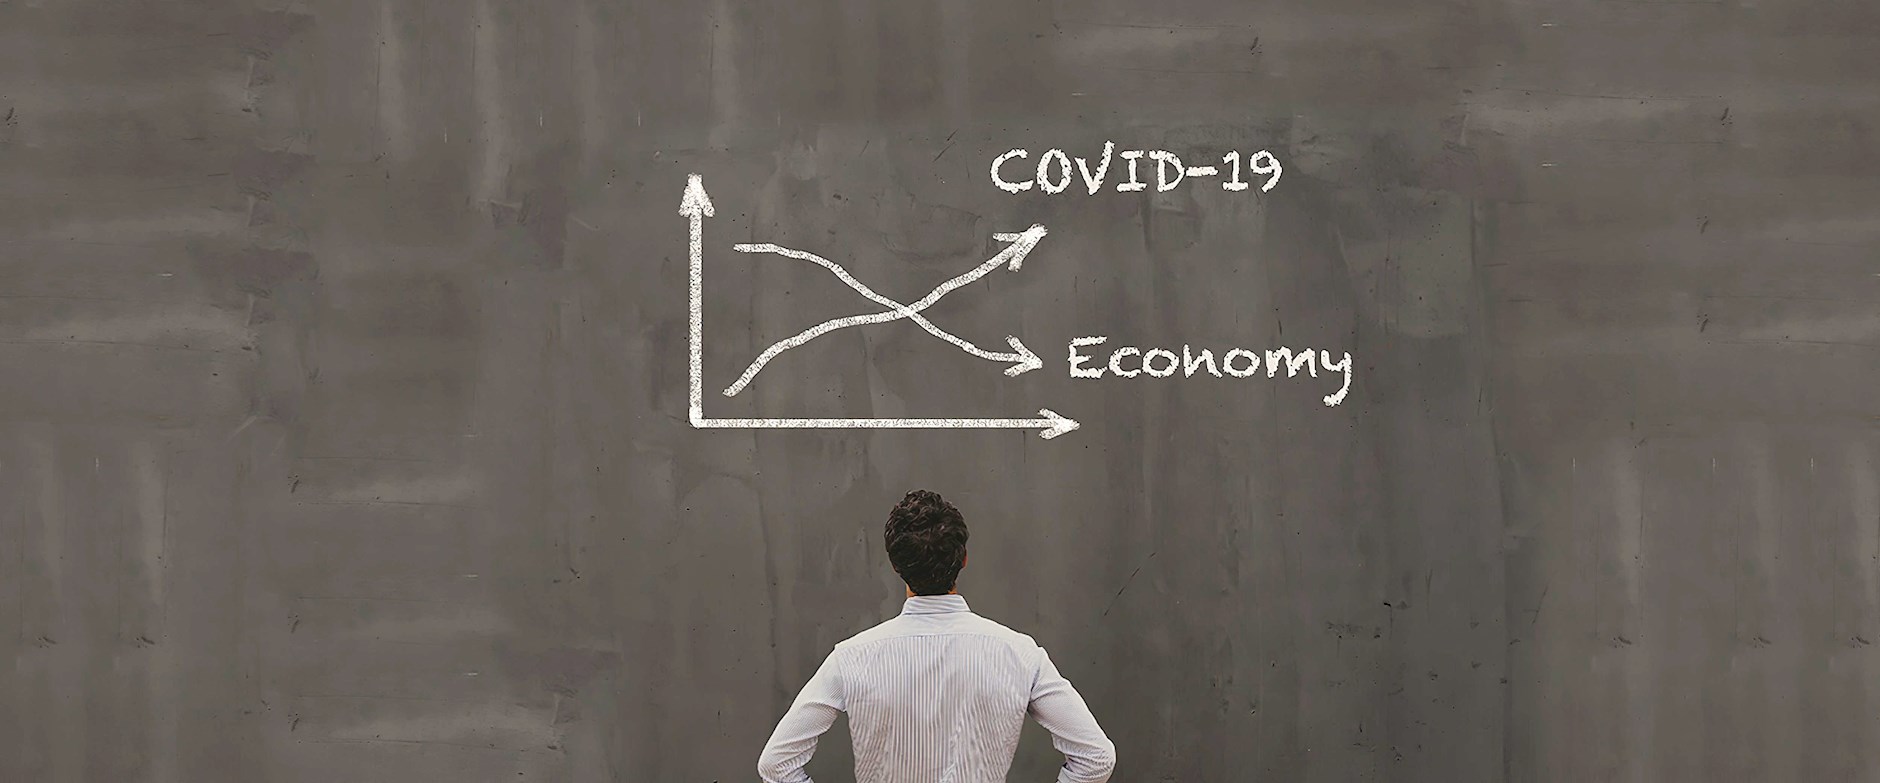 Man looking at covid-19 chart on chalkboard